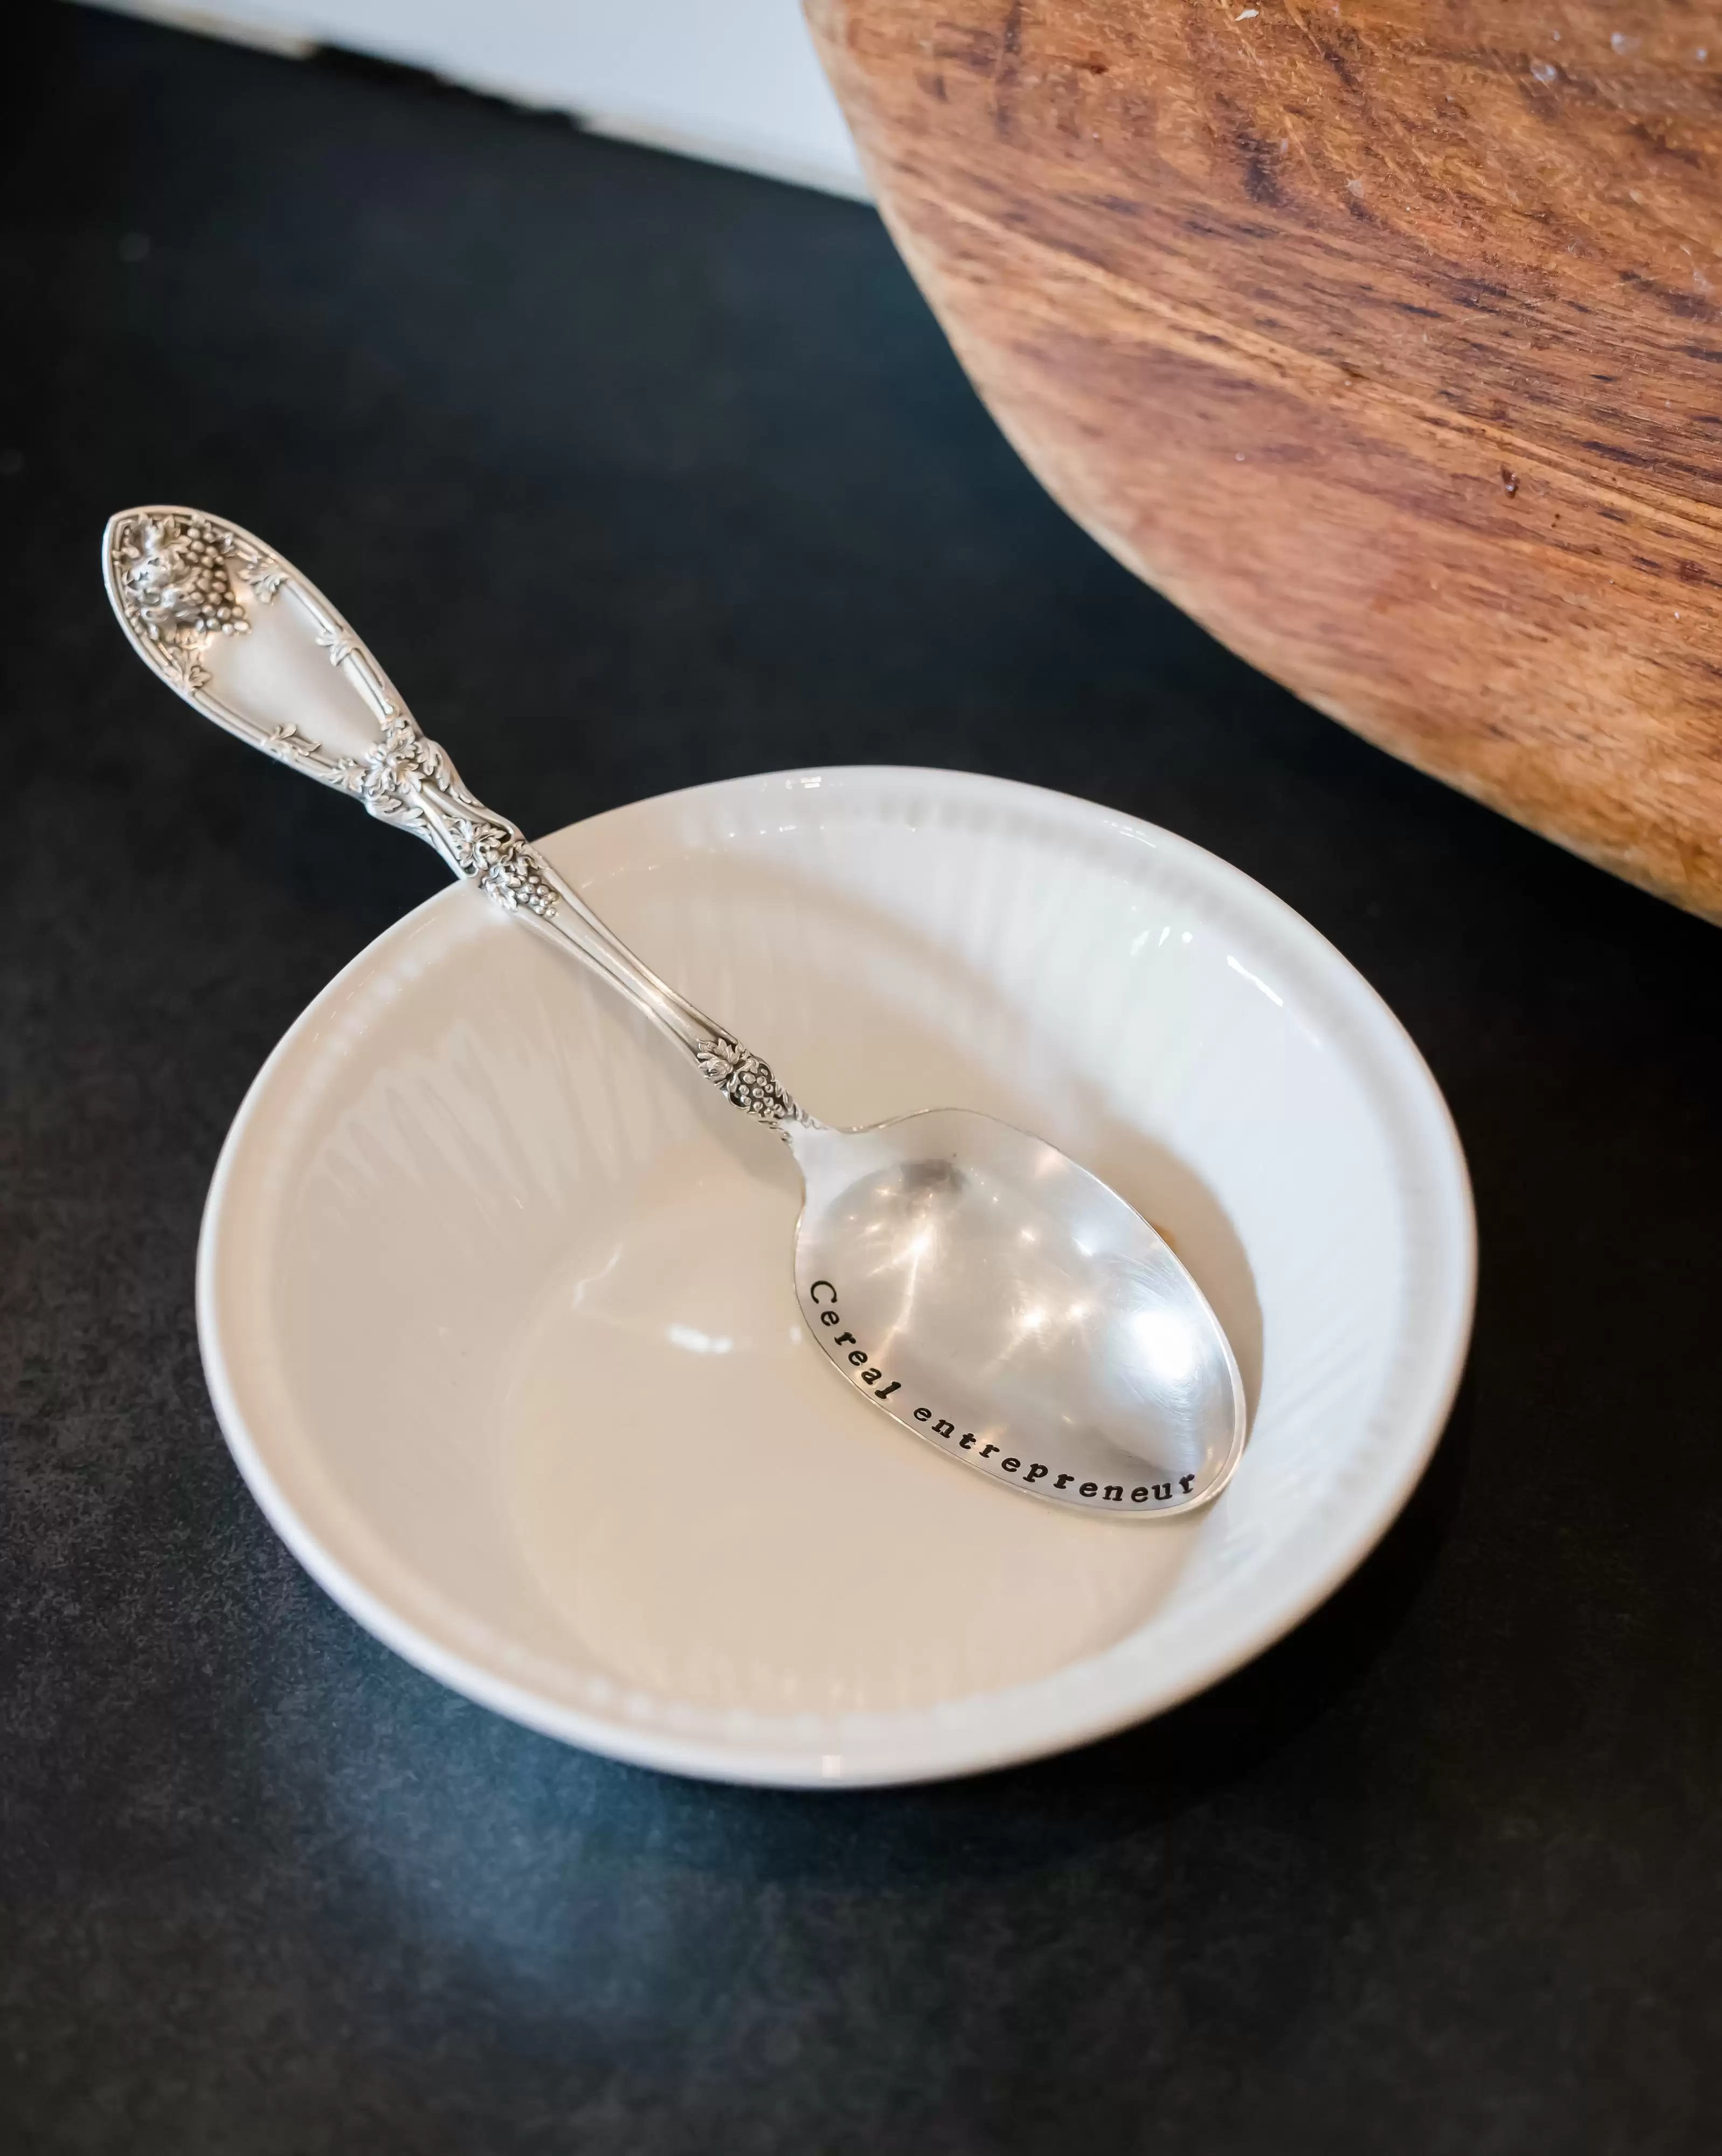 Cereal entrepreneur silver teaspoon in white bowl